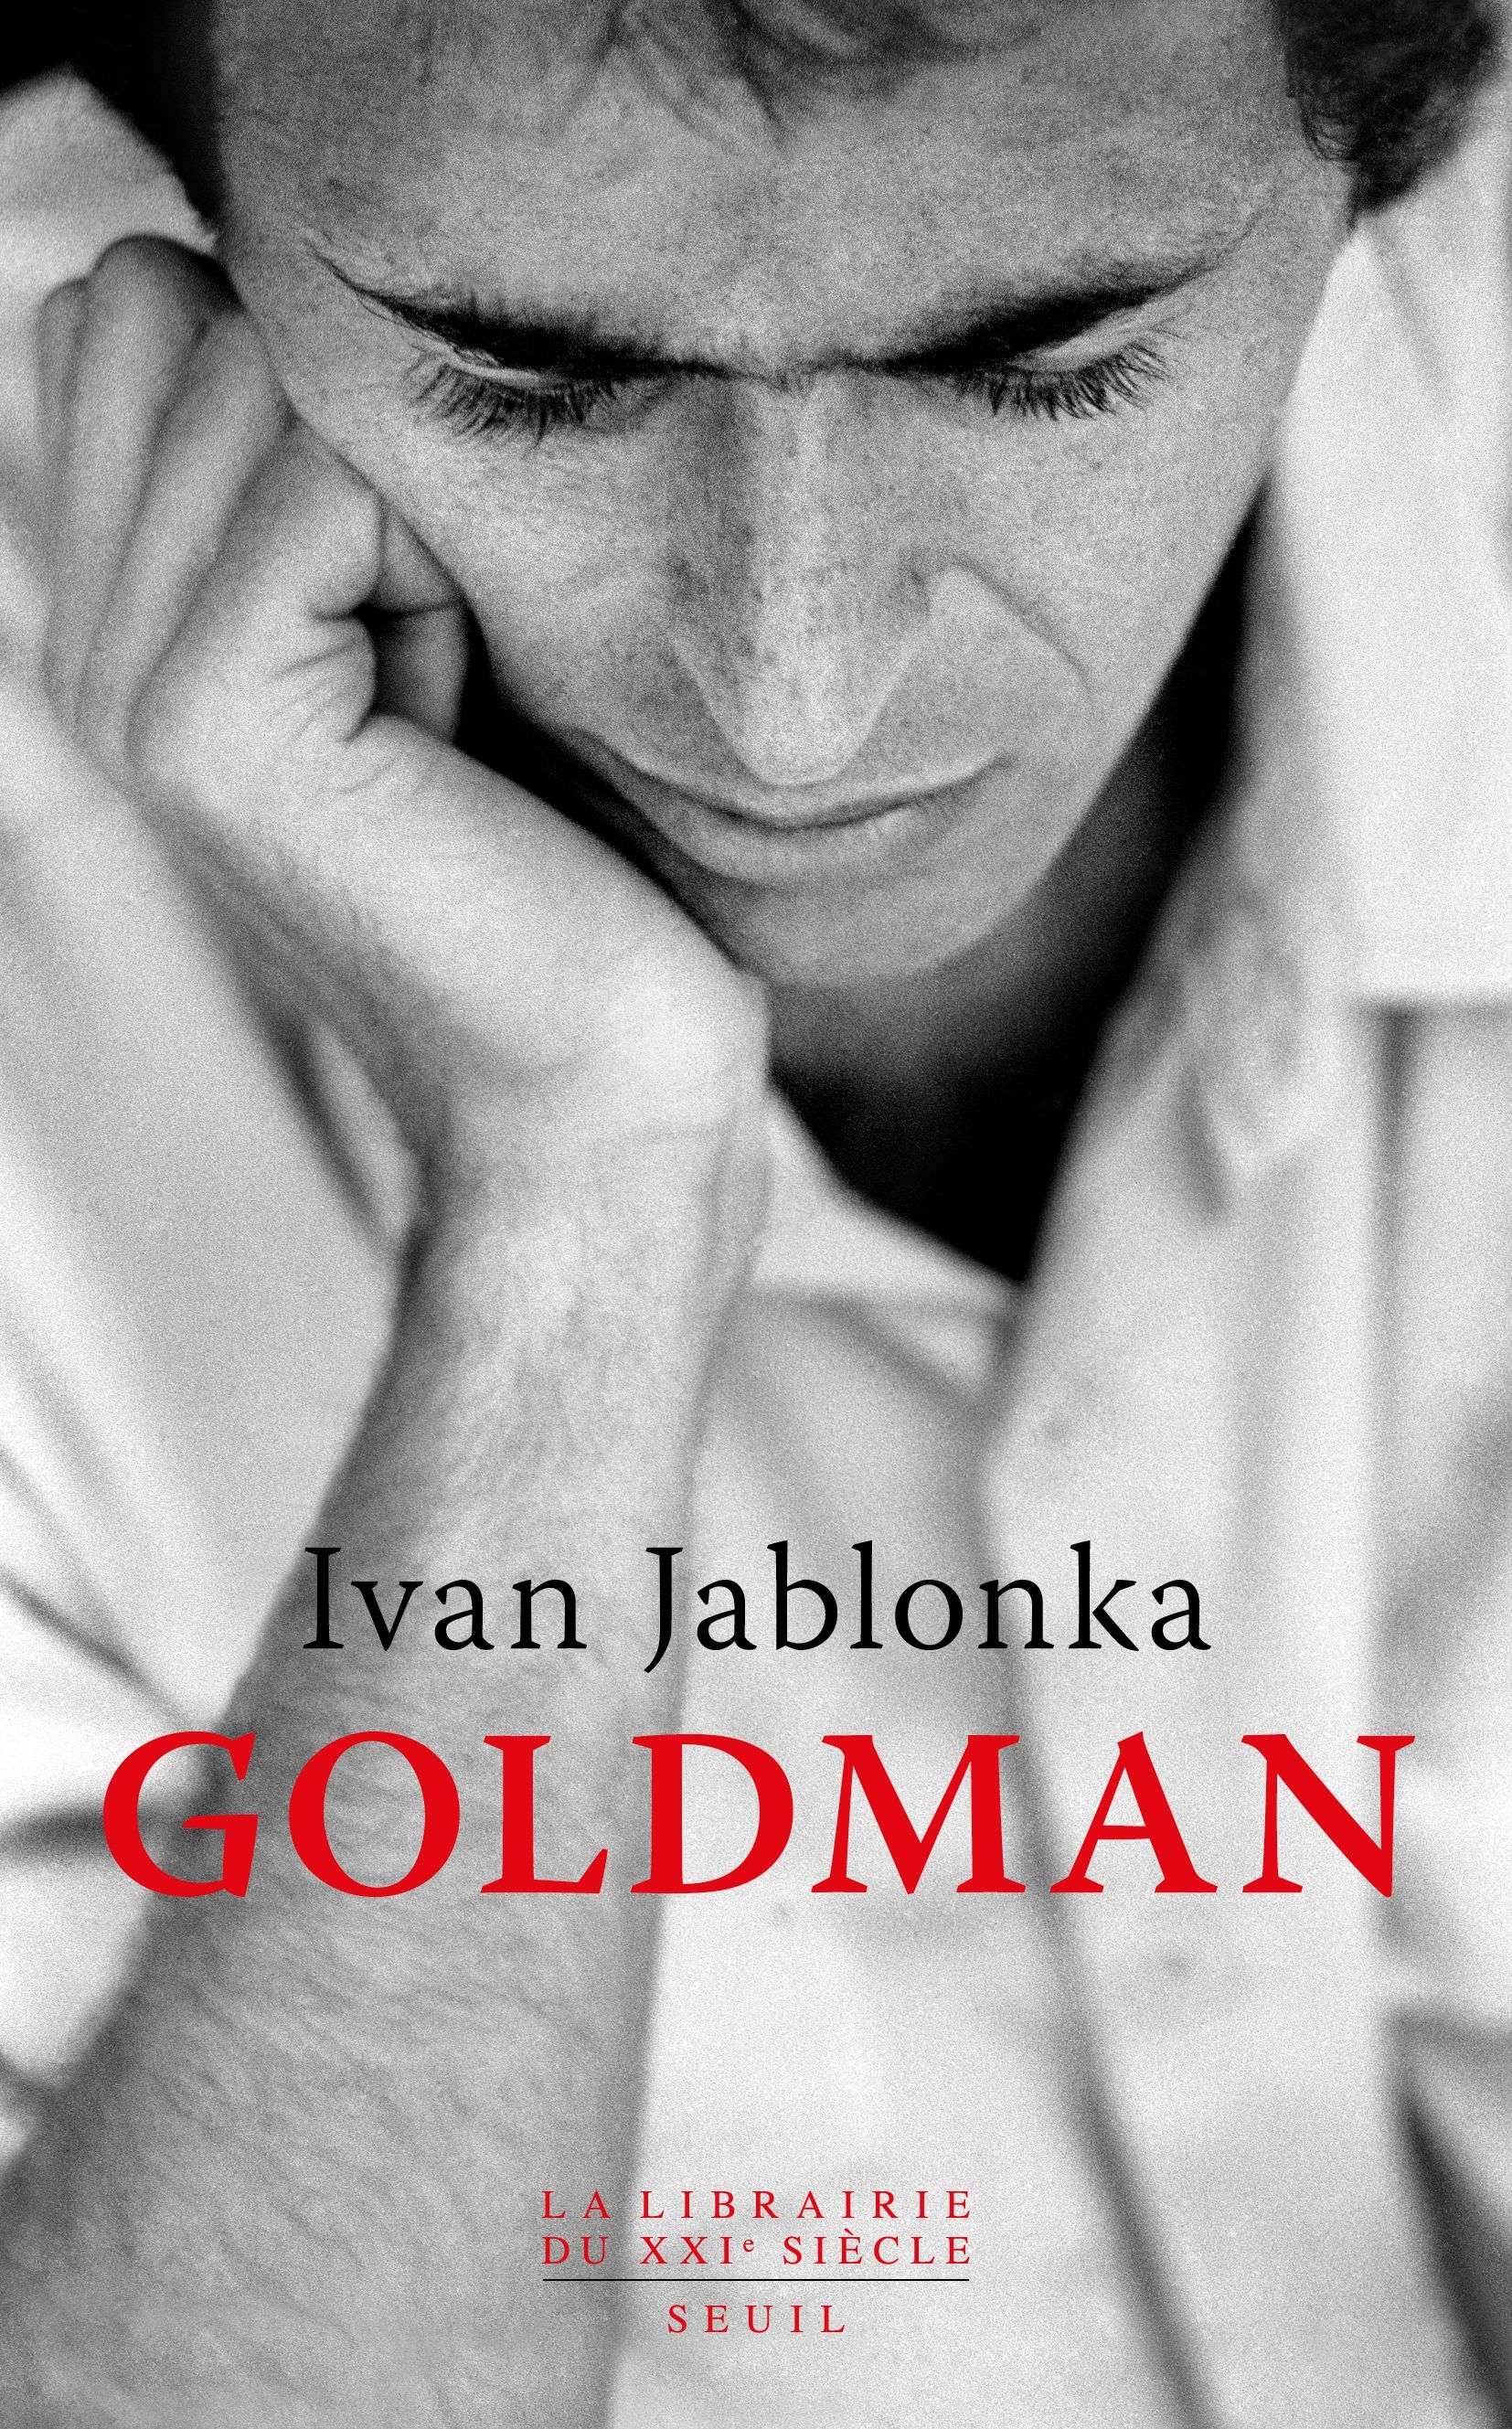 Couv-Goldman-Jablonka.jpg